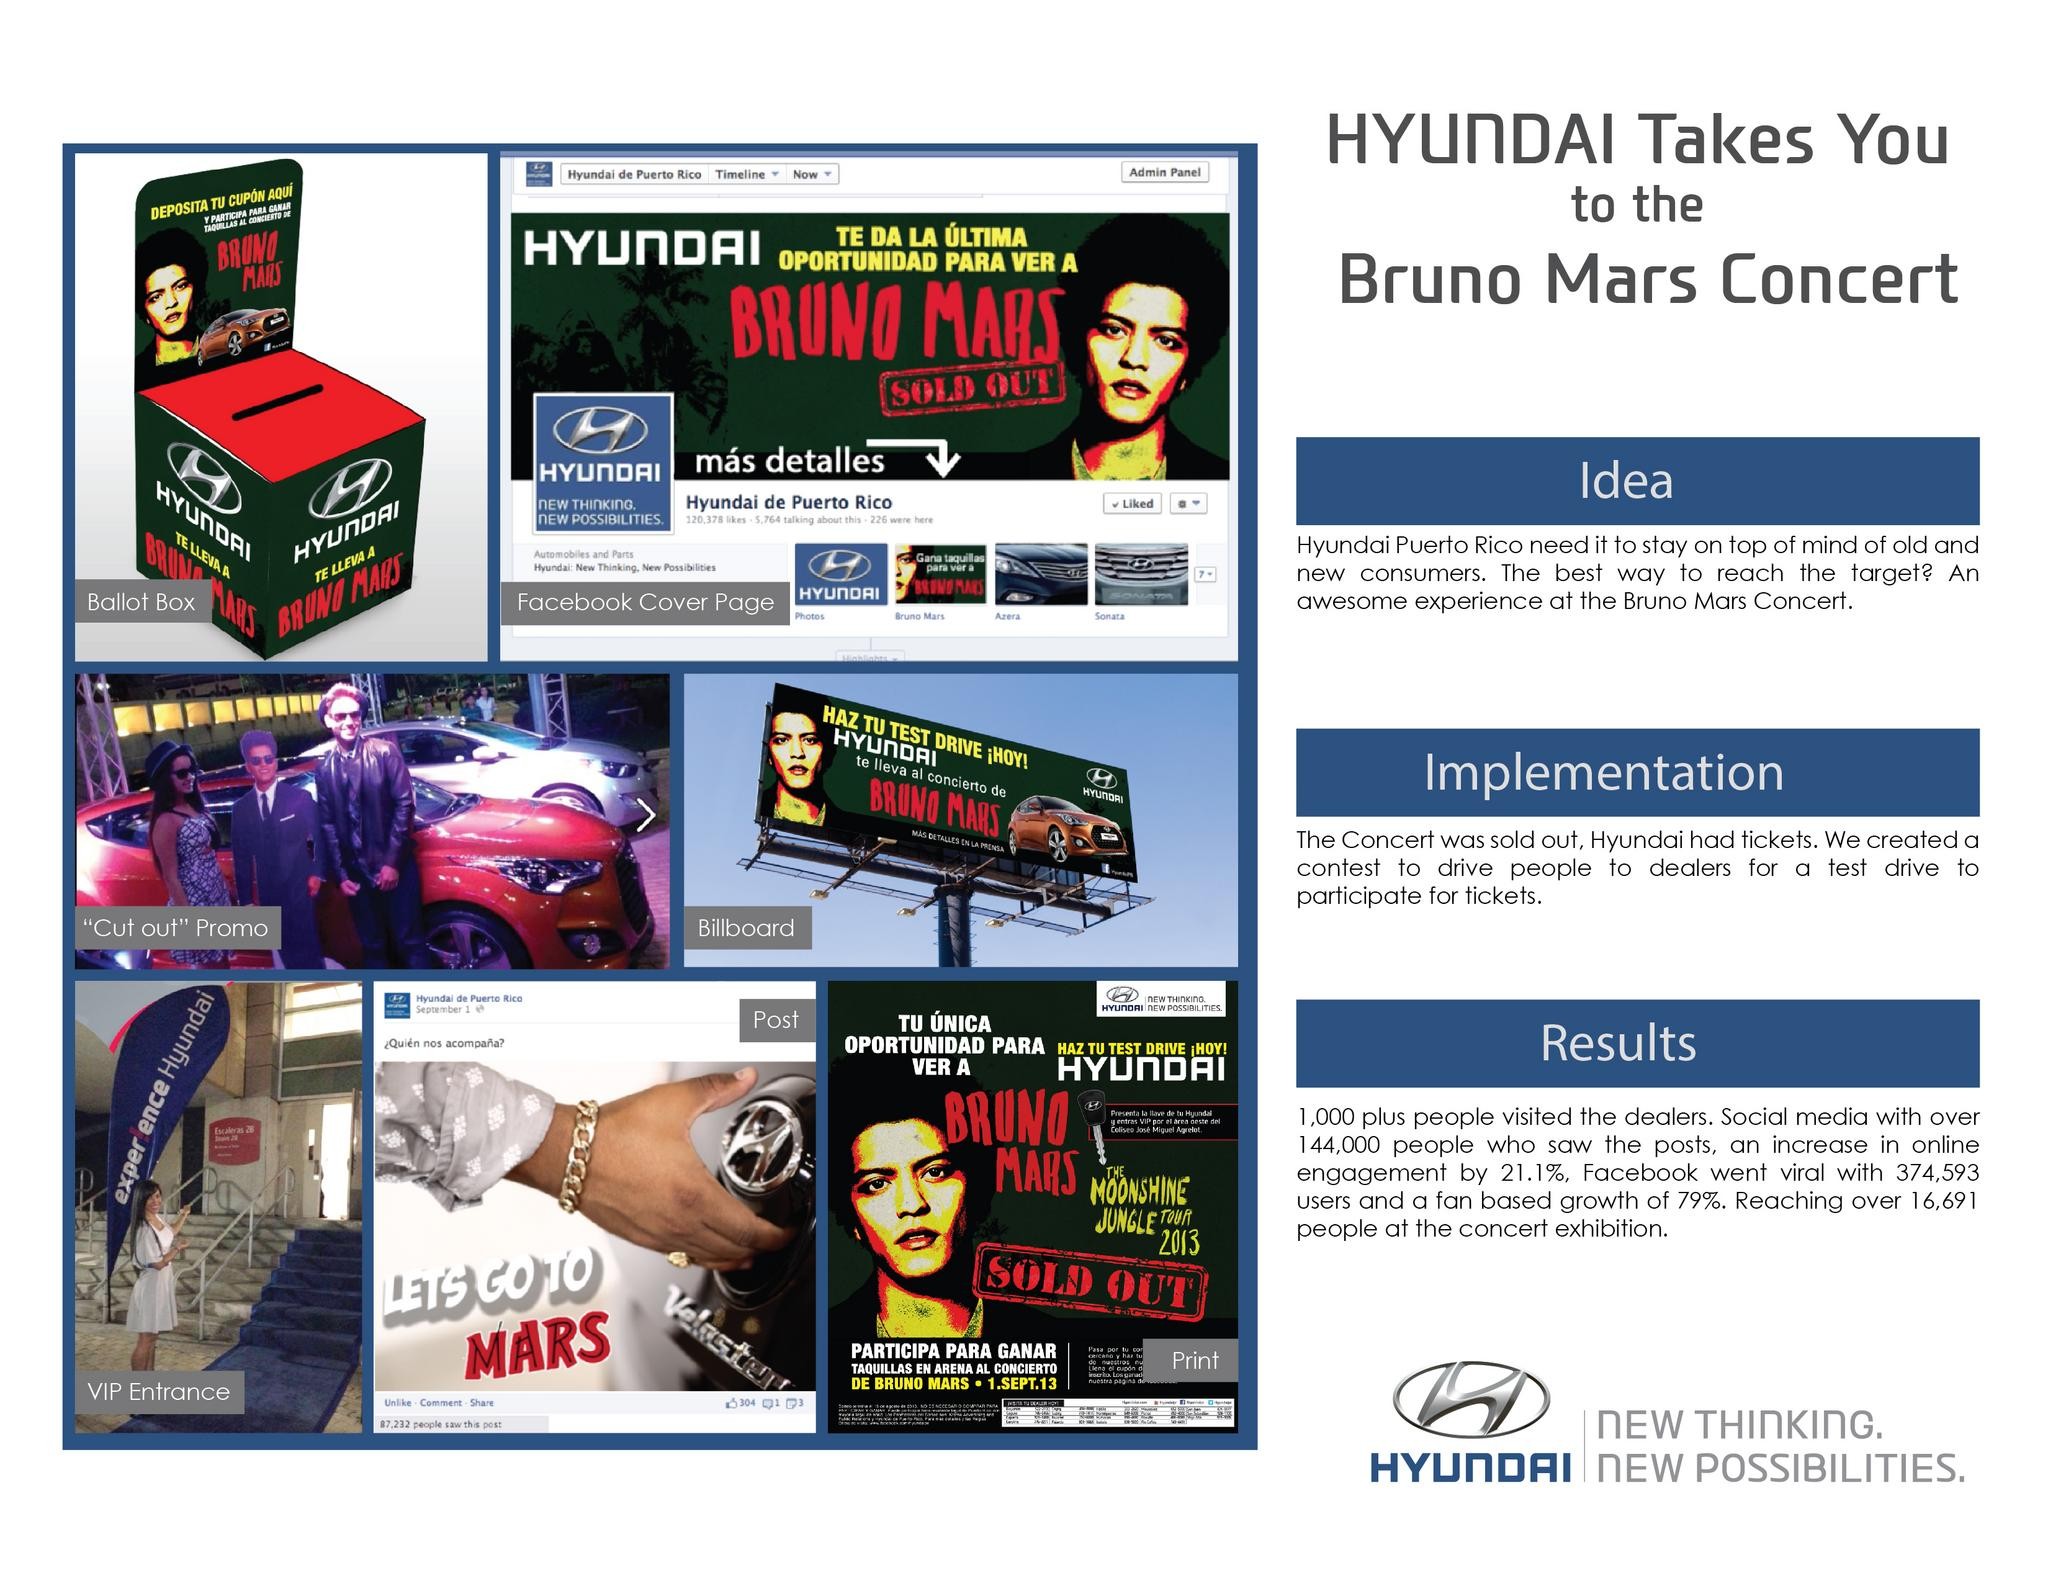 HYUNDAI TAKES YOU TO BRUNO MARS CONCERT